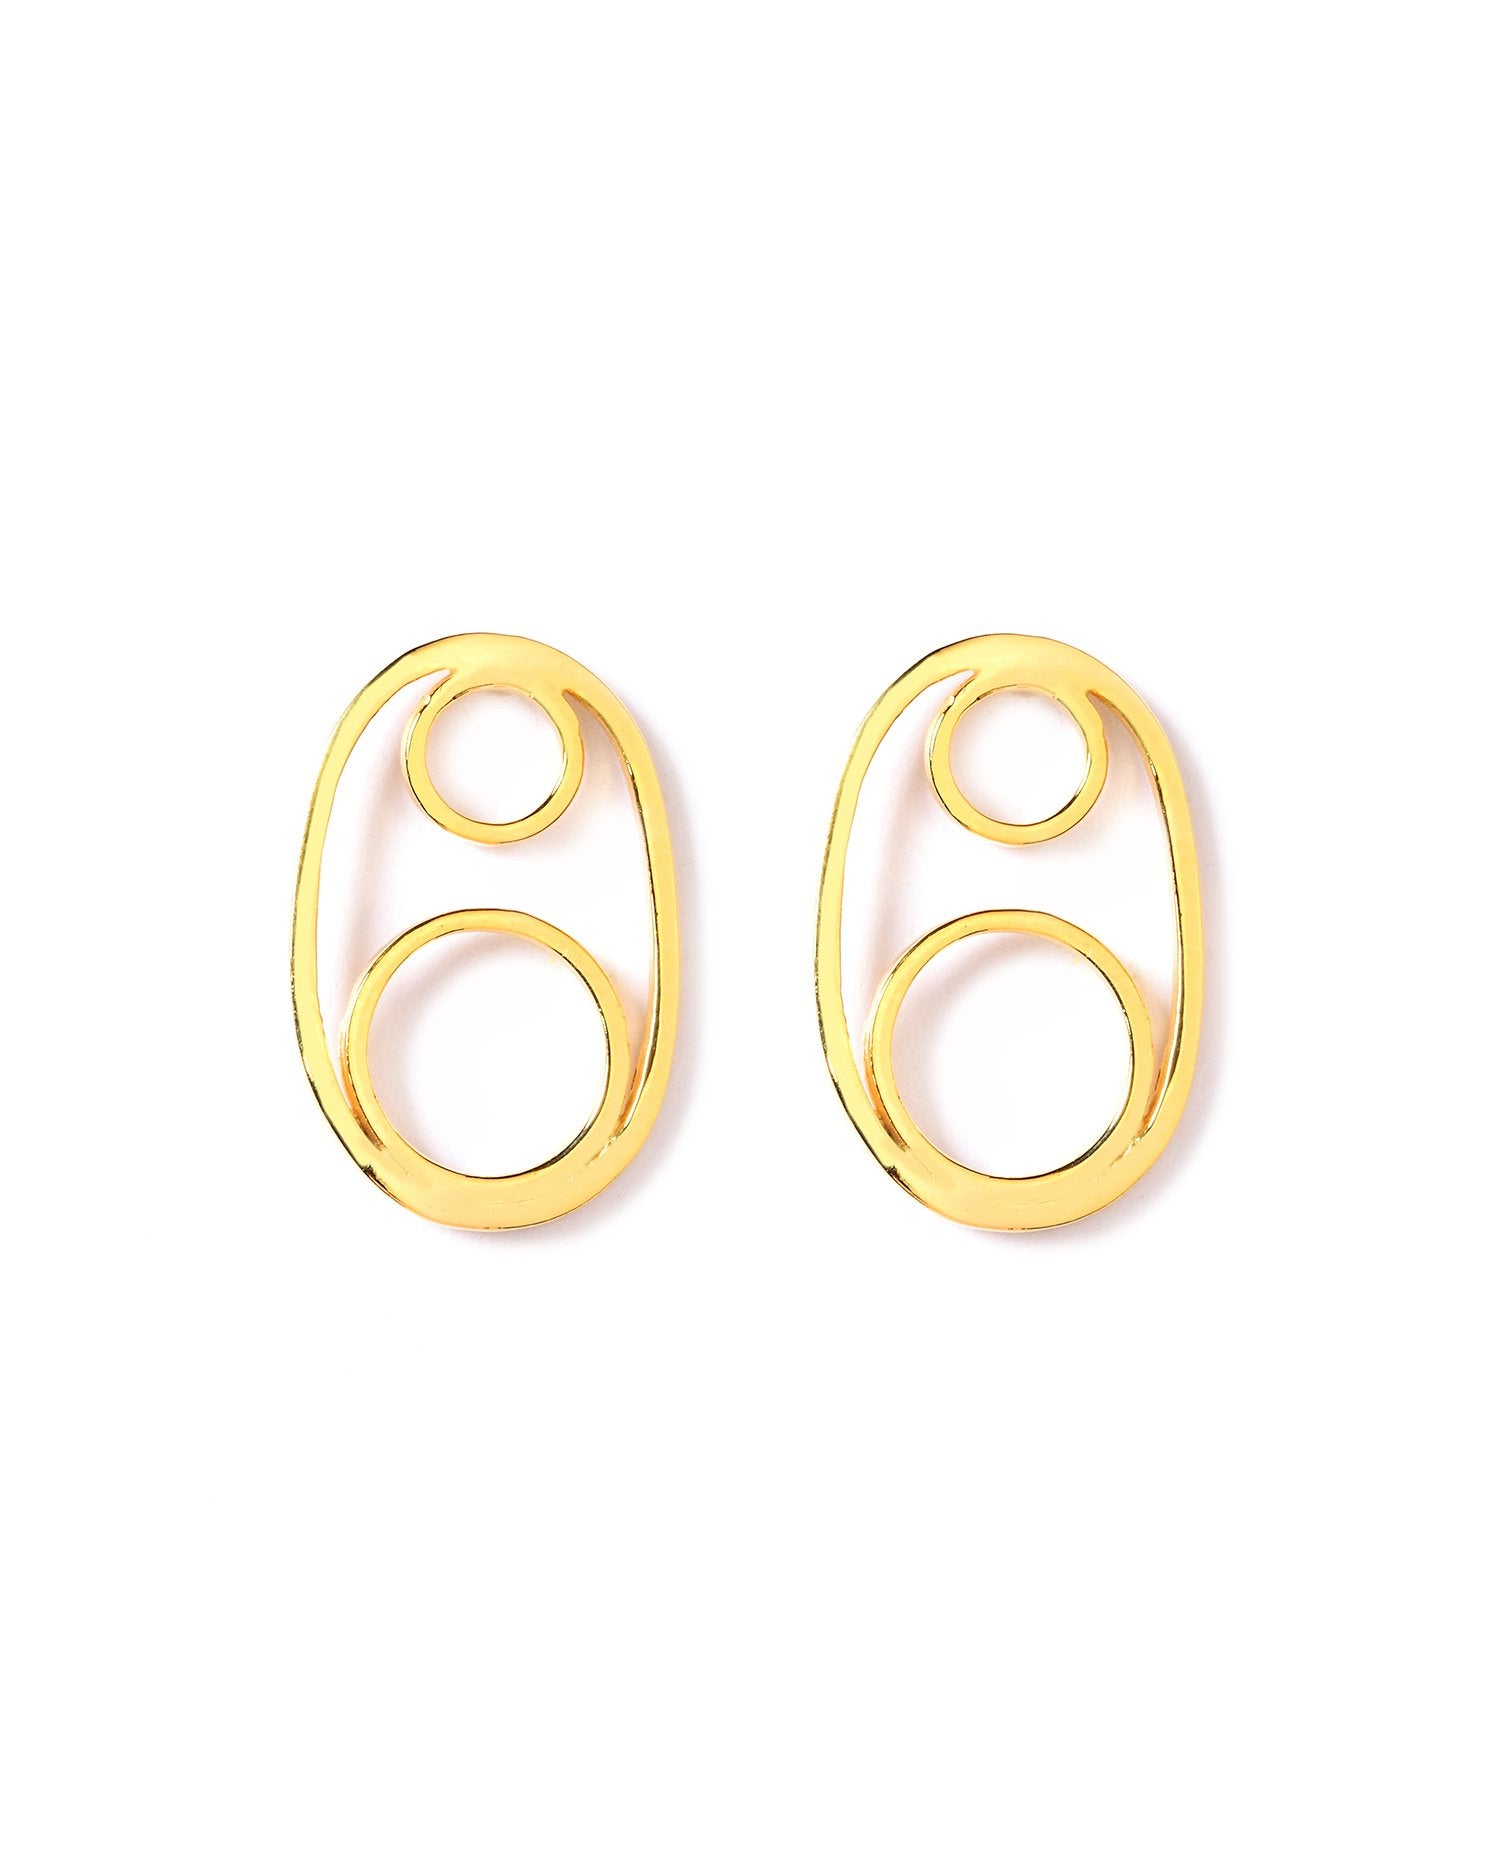 Serenity Golden Oval Stud Earrings